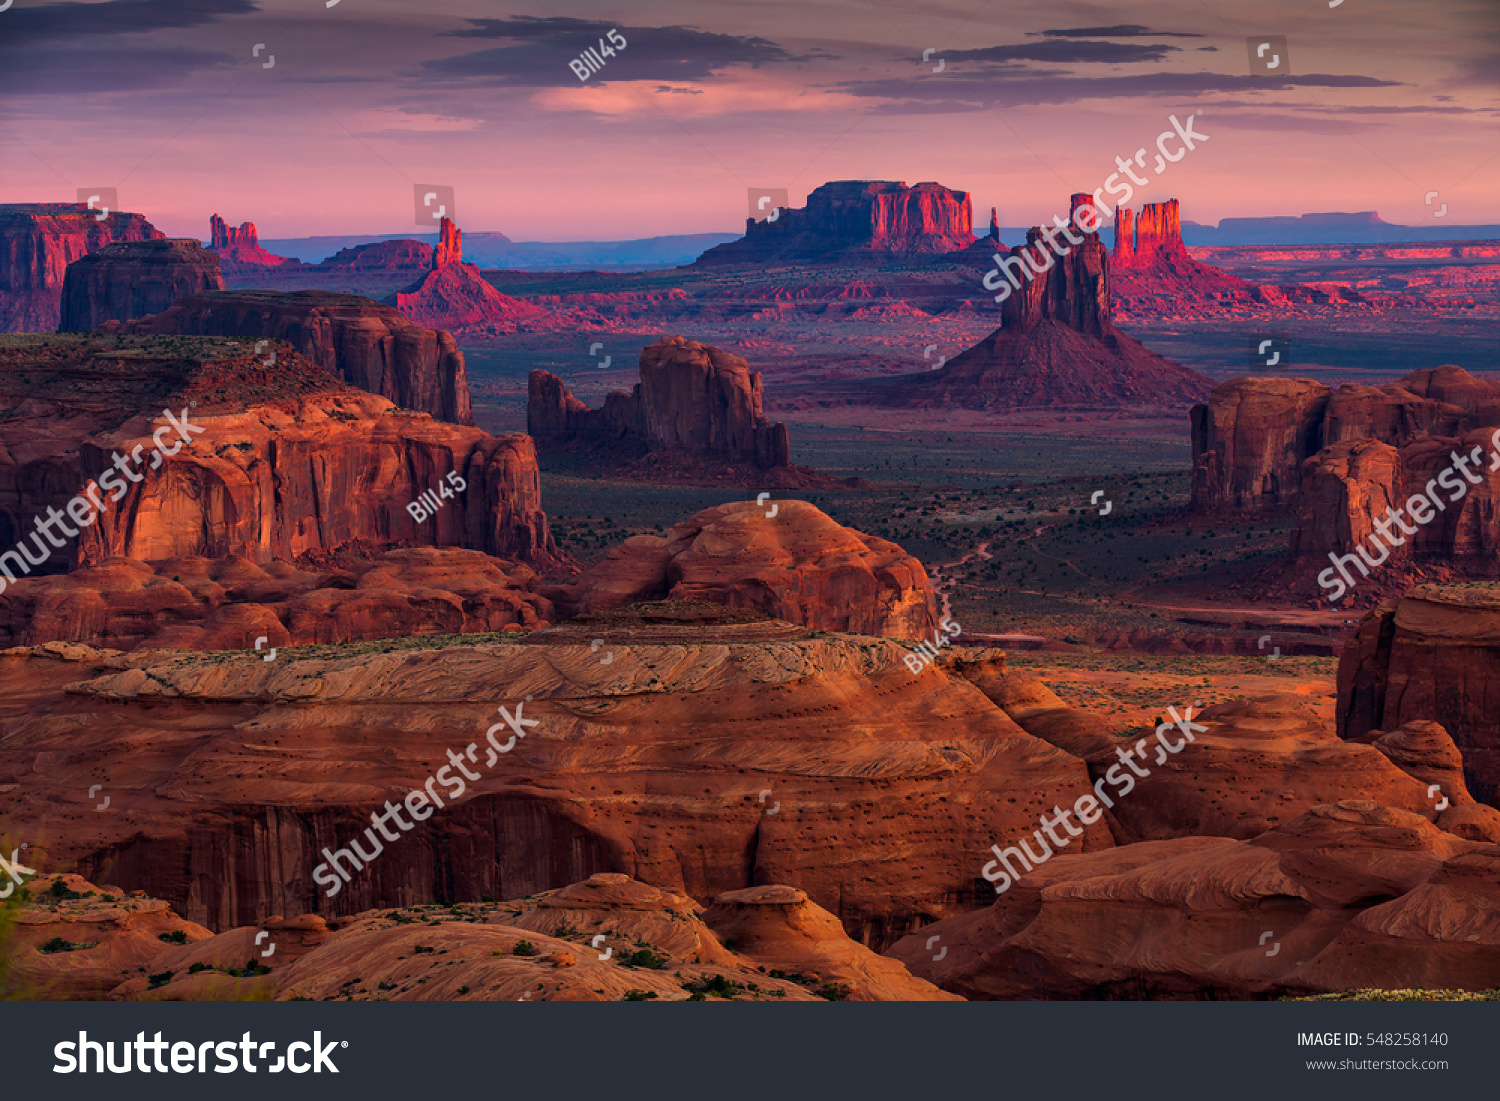 Sunrise in Hunts Mesa navajo tribal majesty place near Monument Valley, Arizona, USA #548258140